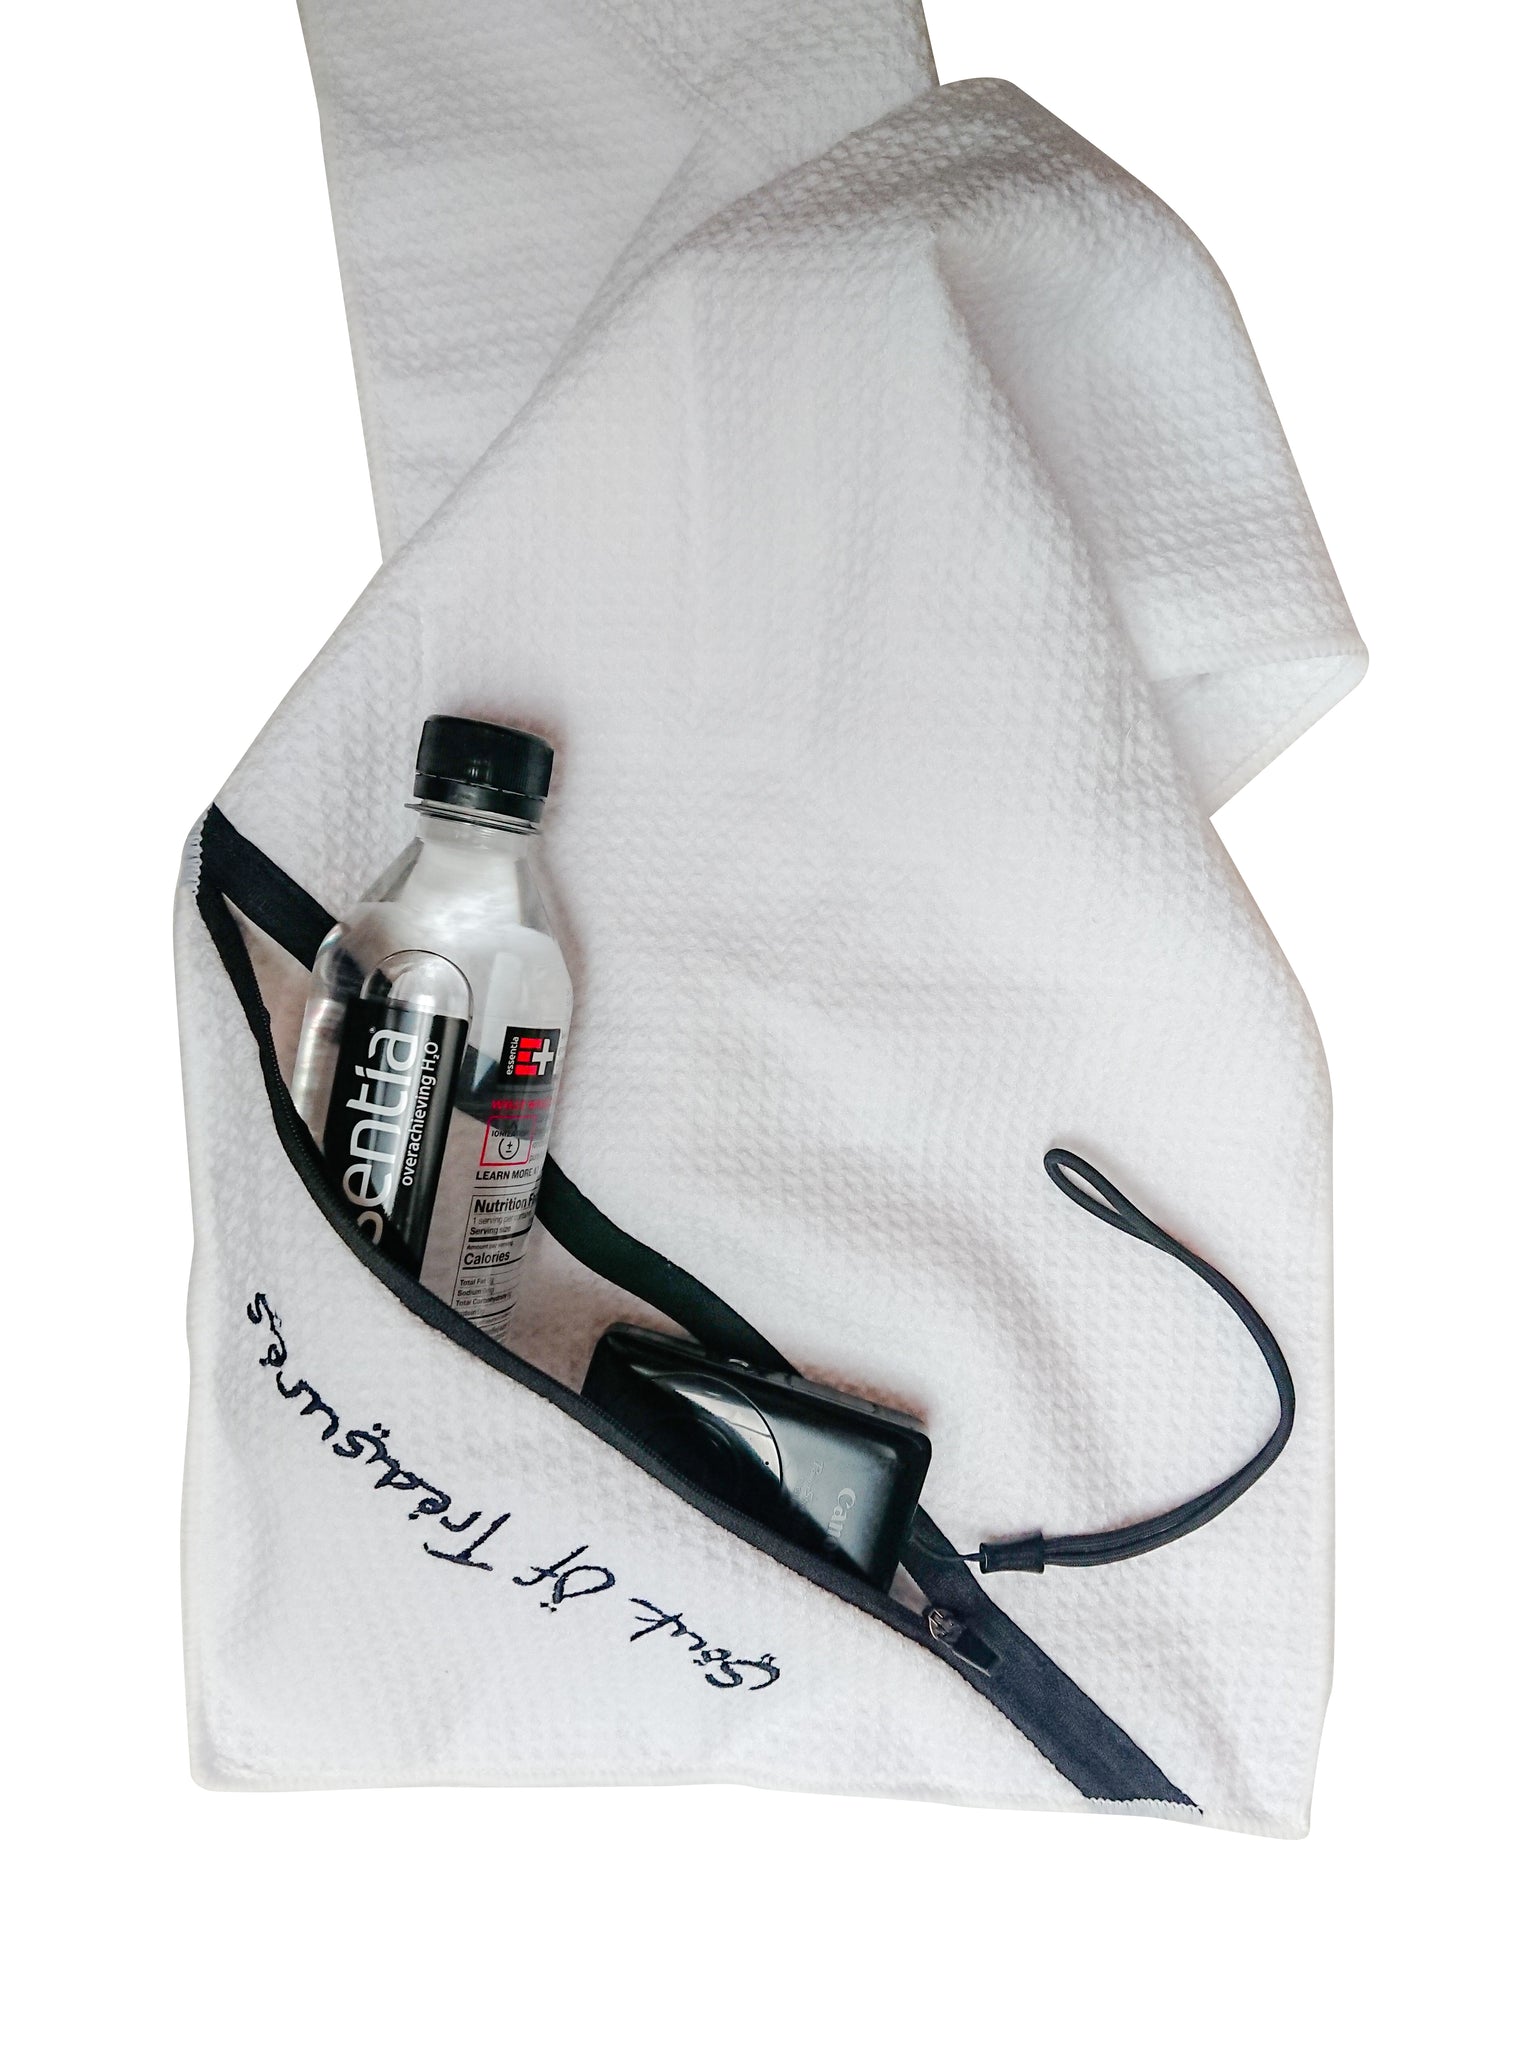 Midnight BLACK Smart & Absorbant Gym / Golf Towel With Zipper Pocket for Keys, Wallet, Cards, etc.